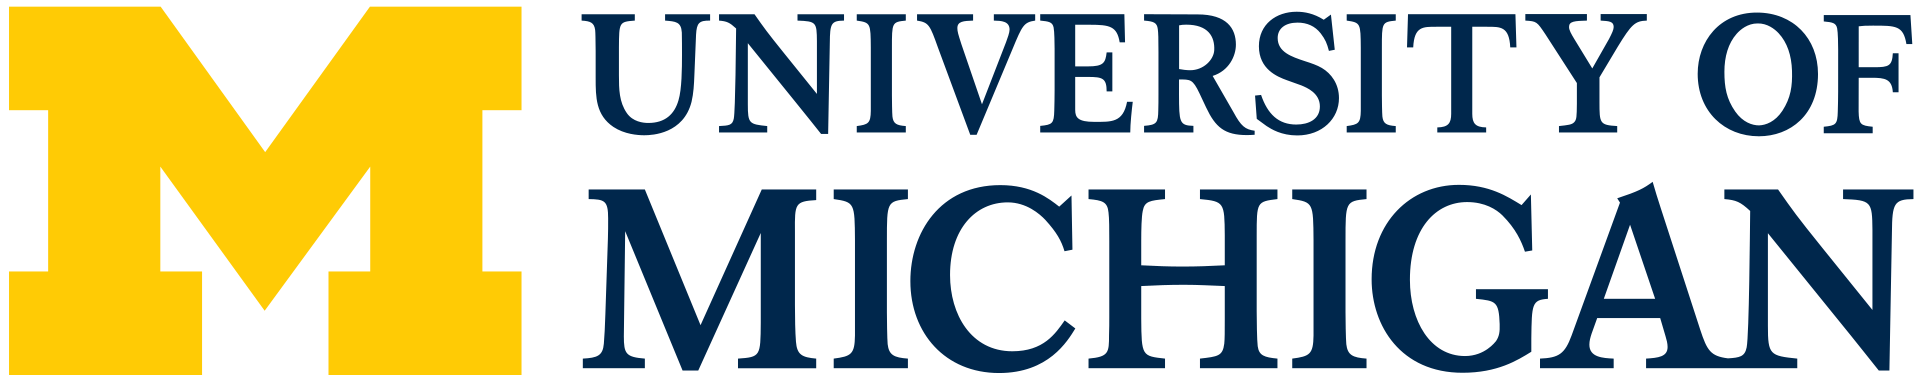 University of Michigan logo, By University of Michigan - https://vpcomm.umich.edu/brand/downloads/um-logo, Public Domain, https://commons.wikimedia.org/w/index.php?curid=71242380